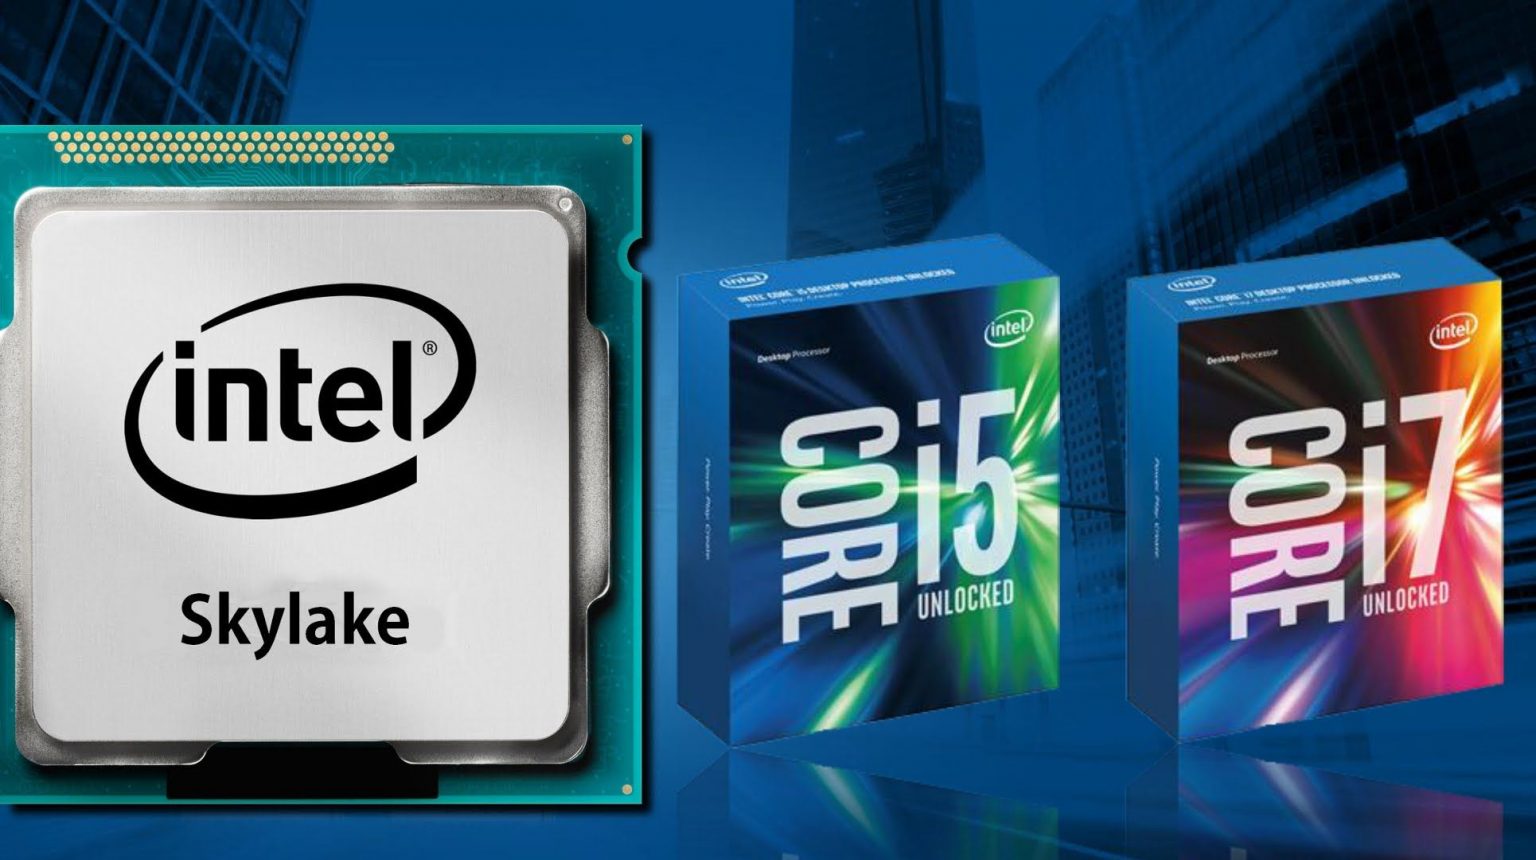 Intel skylake